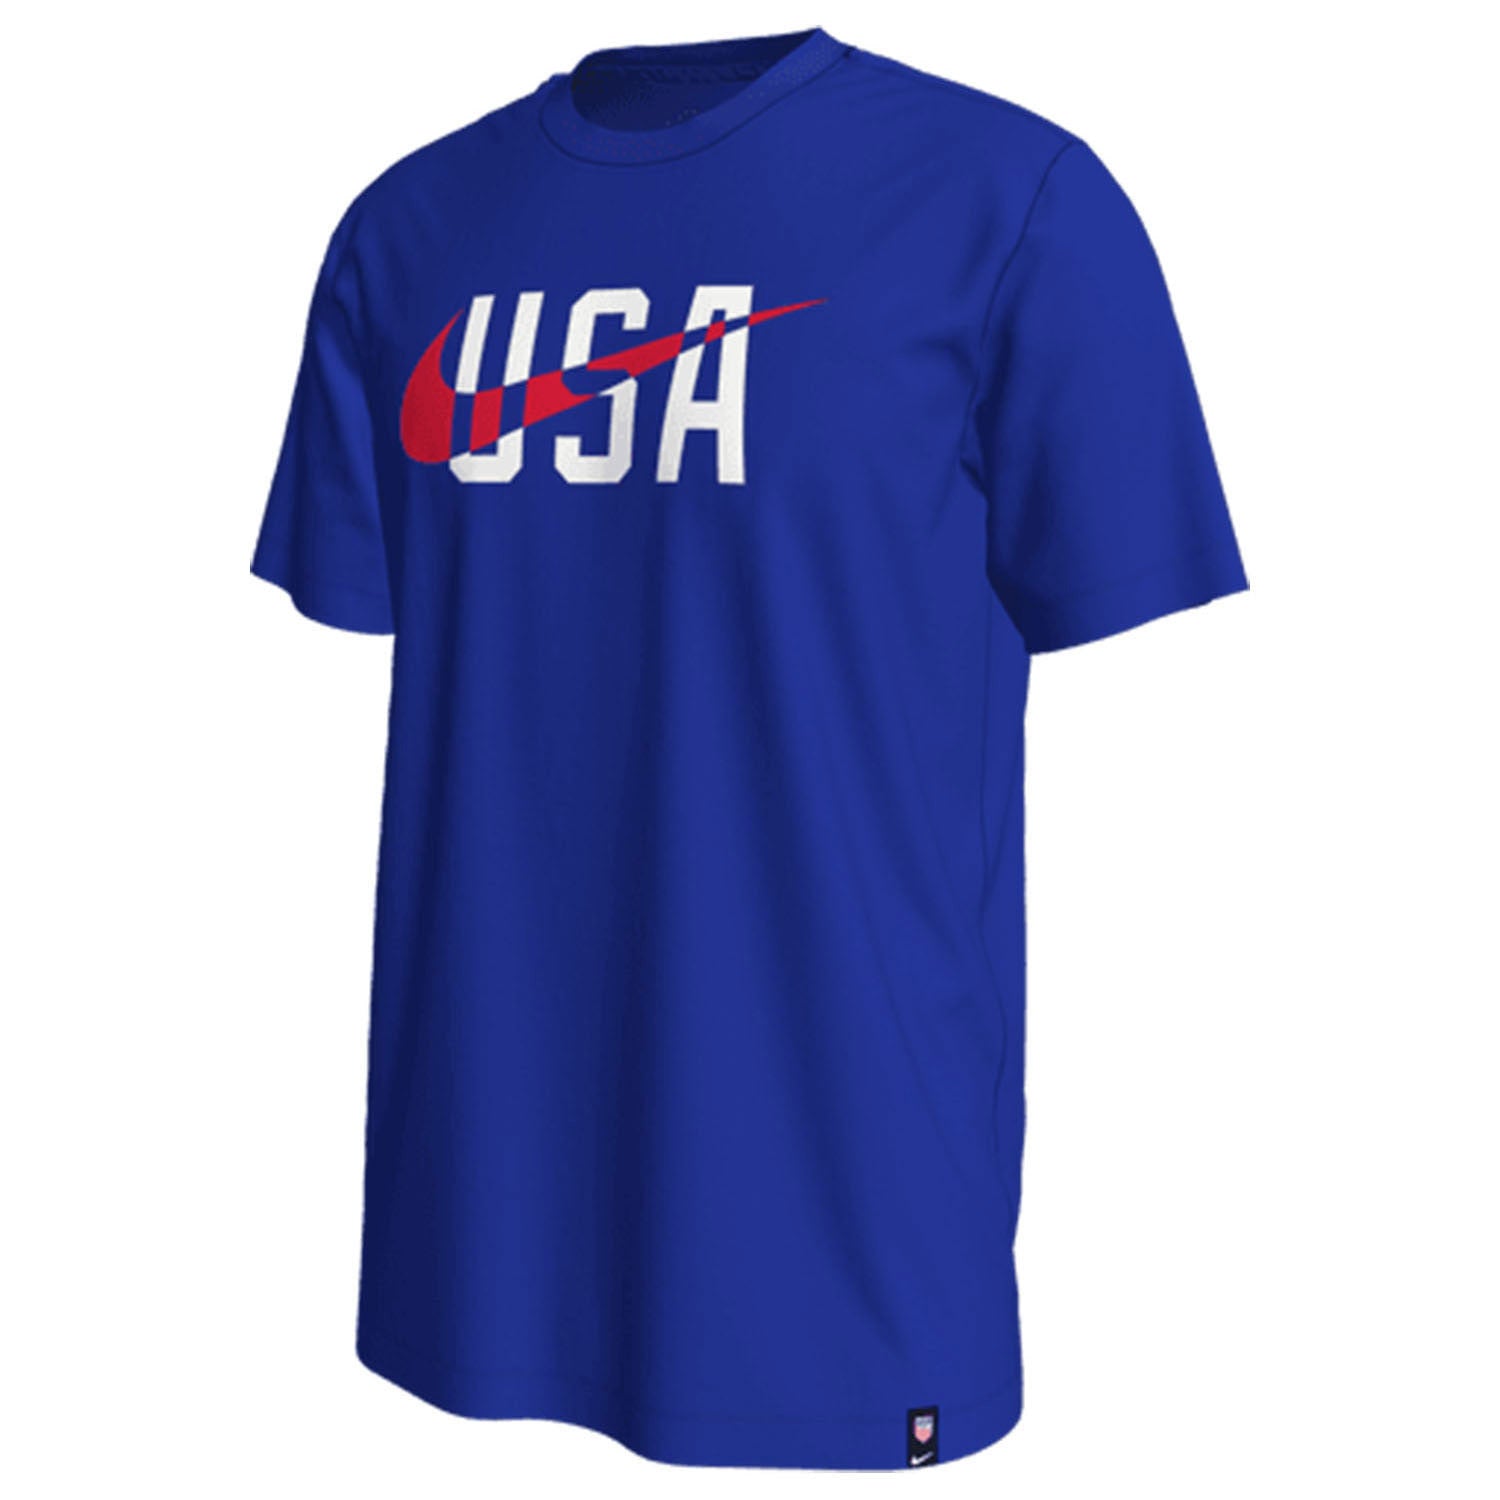 Men\'s Nike Swoosh Official Soccer Store Tee USA U.S. Royal -